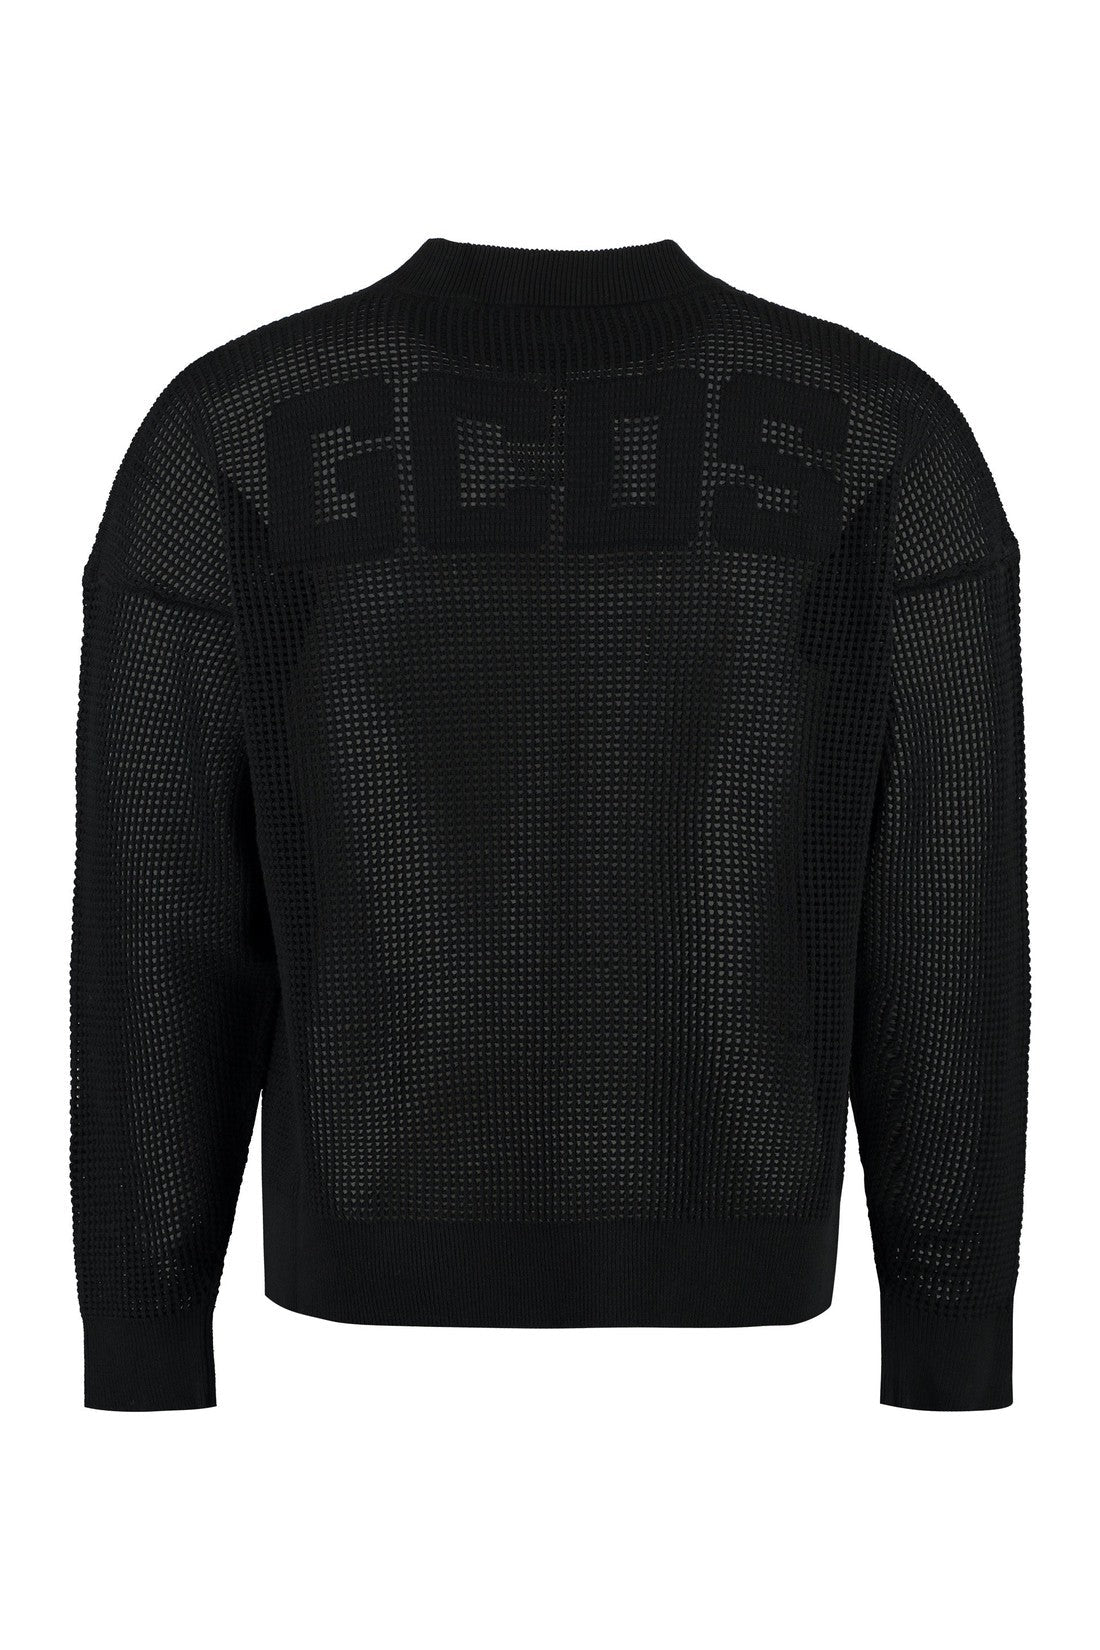 GCDS-OUTLET-SALE-Long sleeve crew-neck sweater-ARCHIVIST